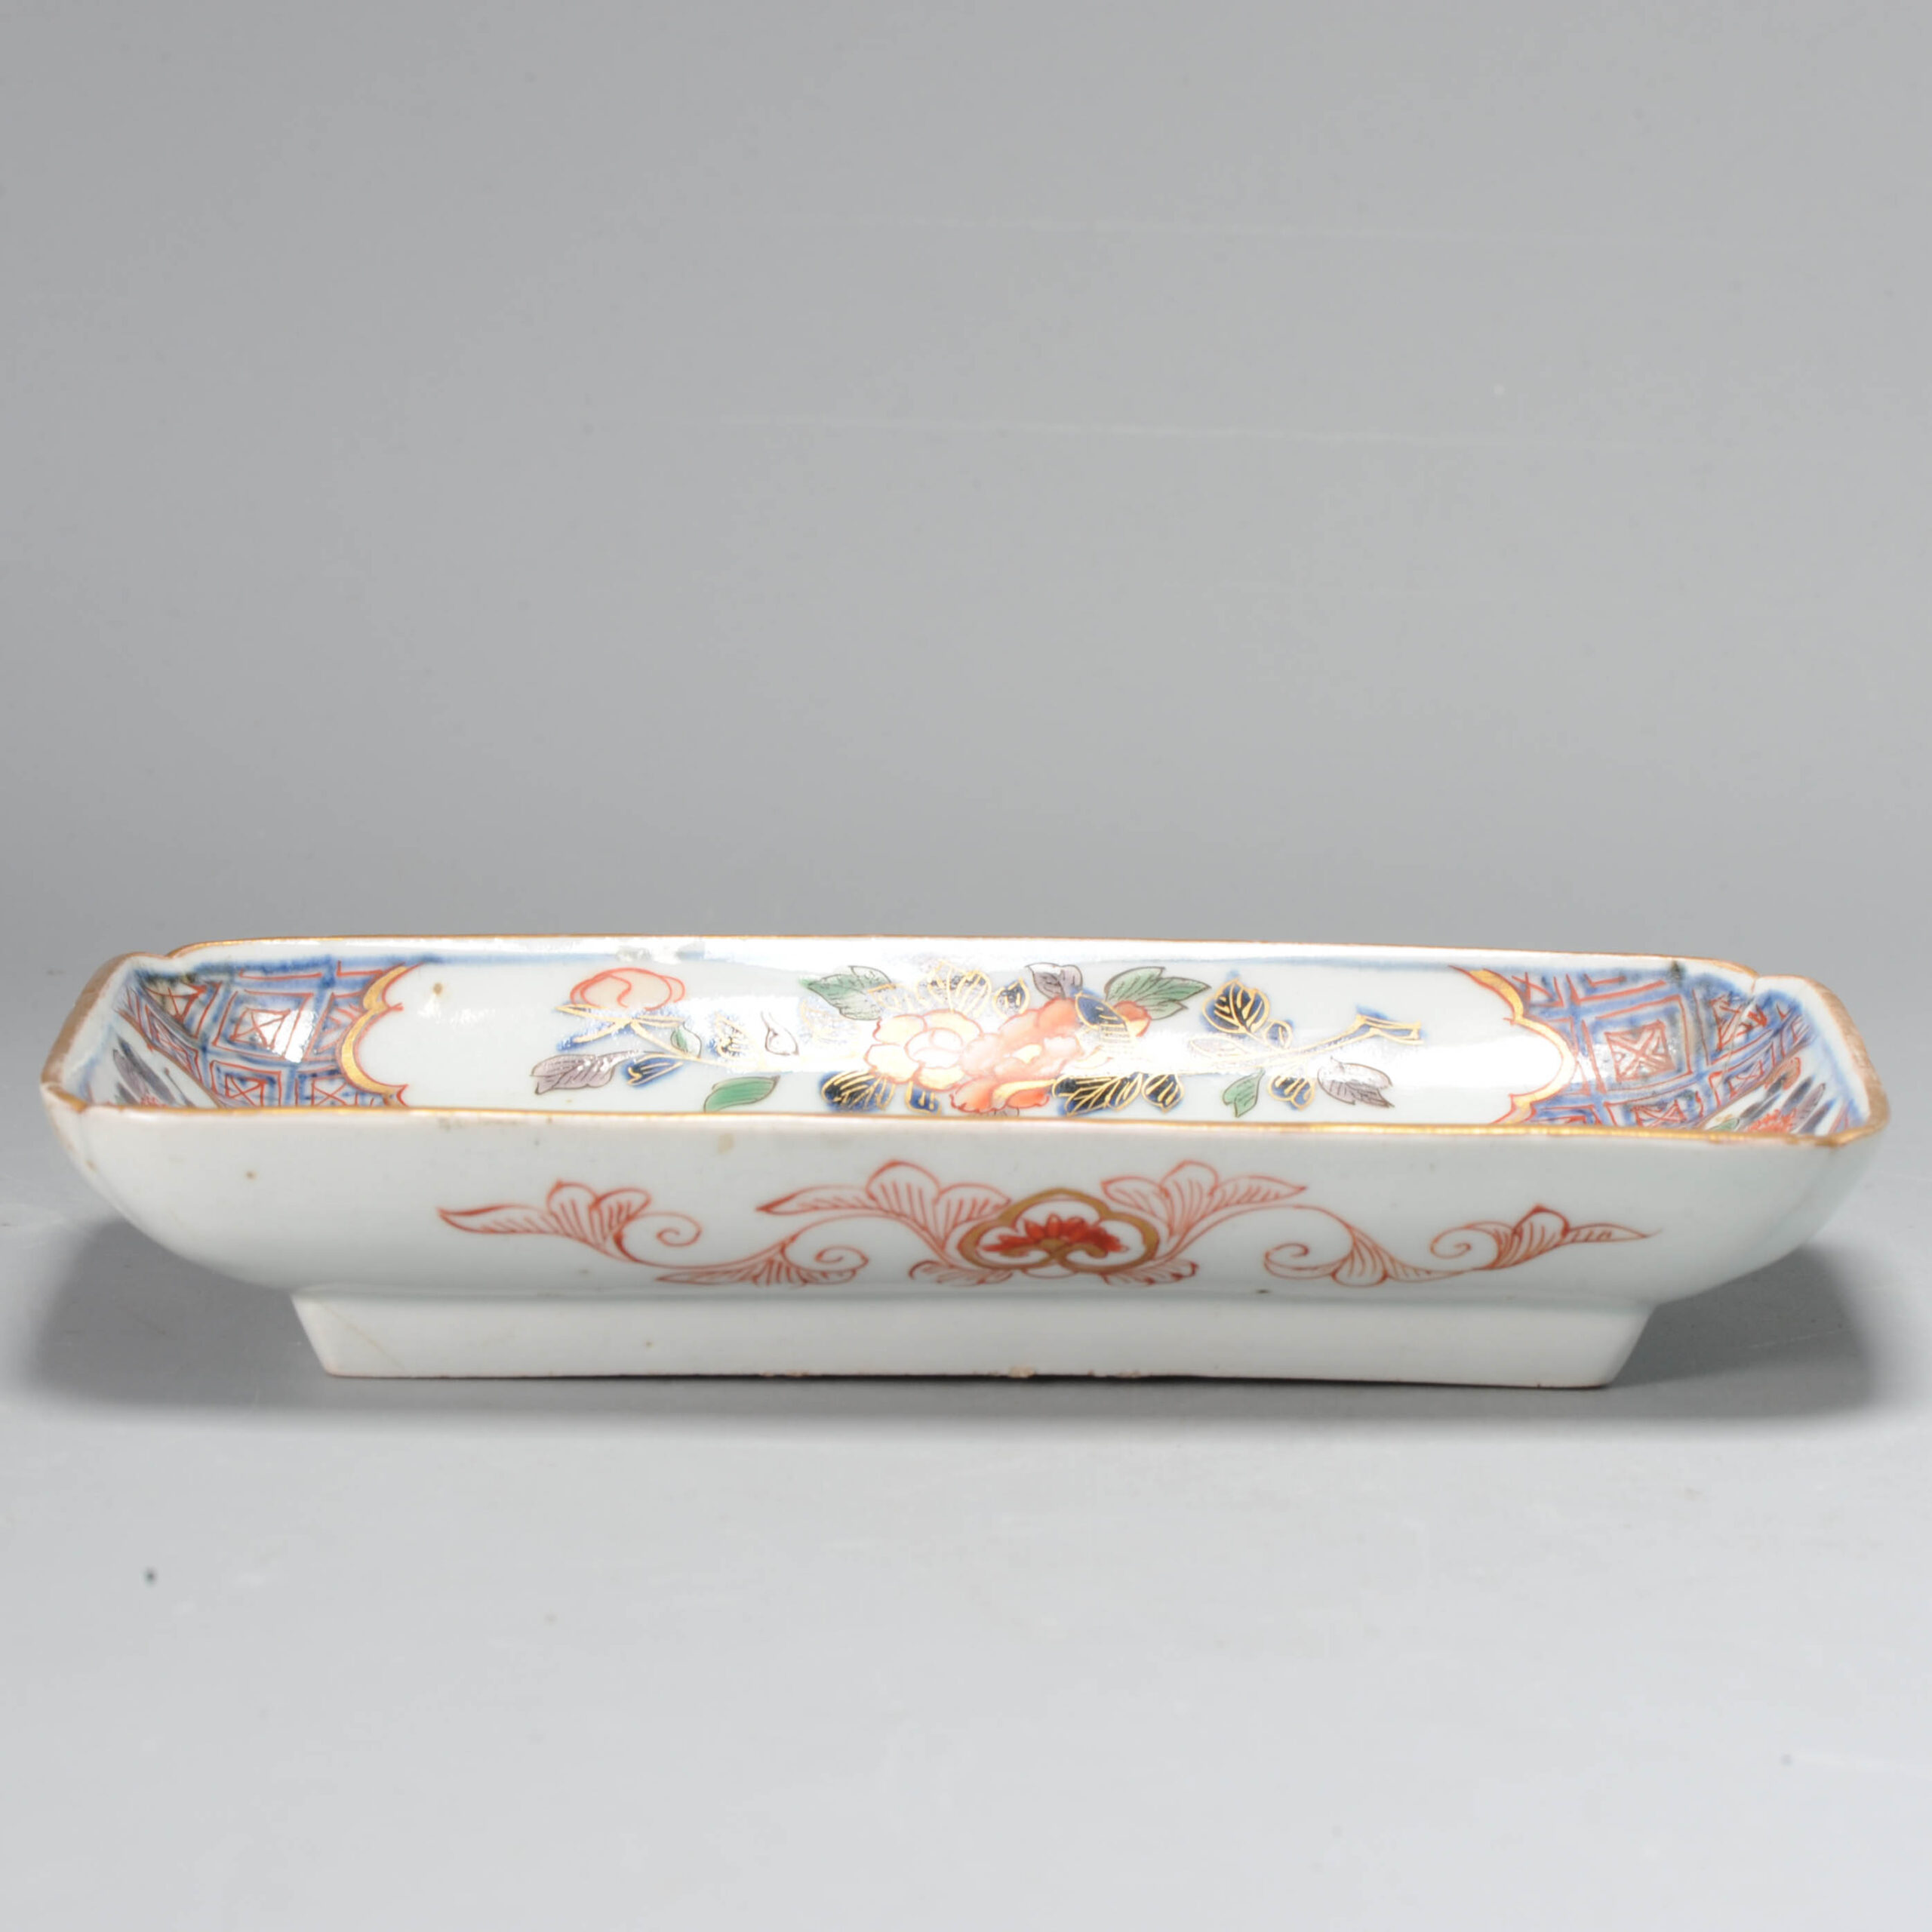 Antique Japanese Arita Porcelain Dishe with added colors 17/18c FUKU mark